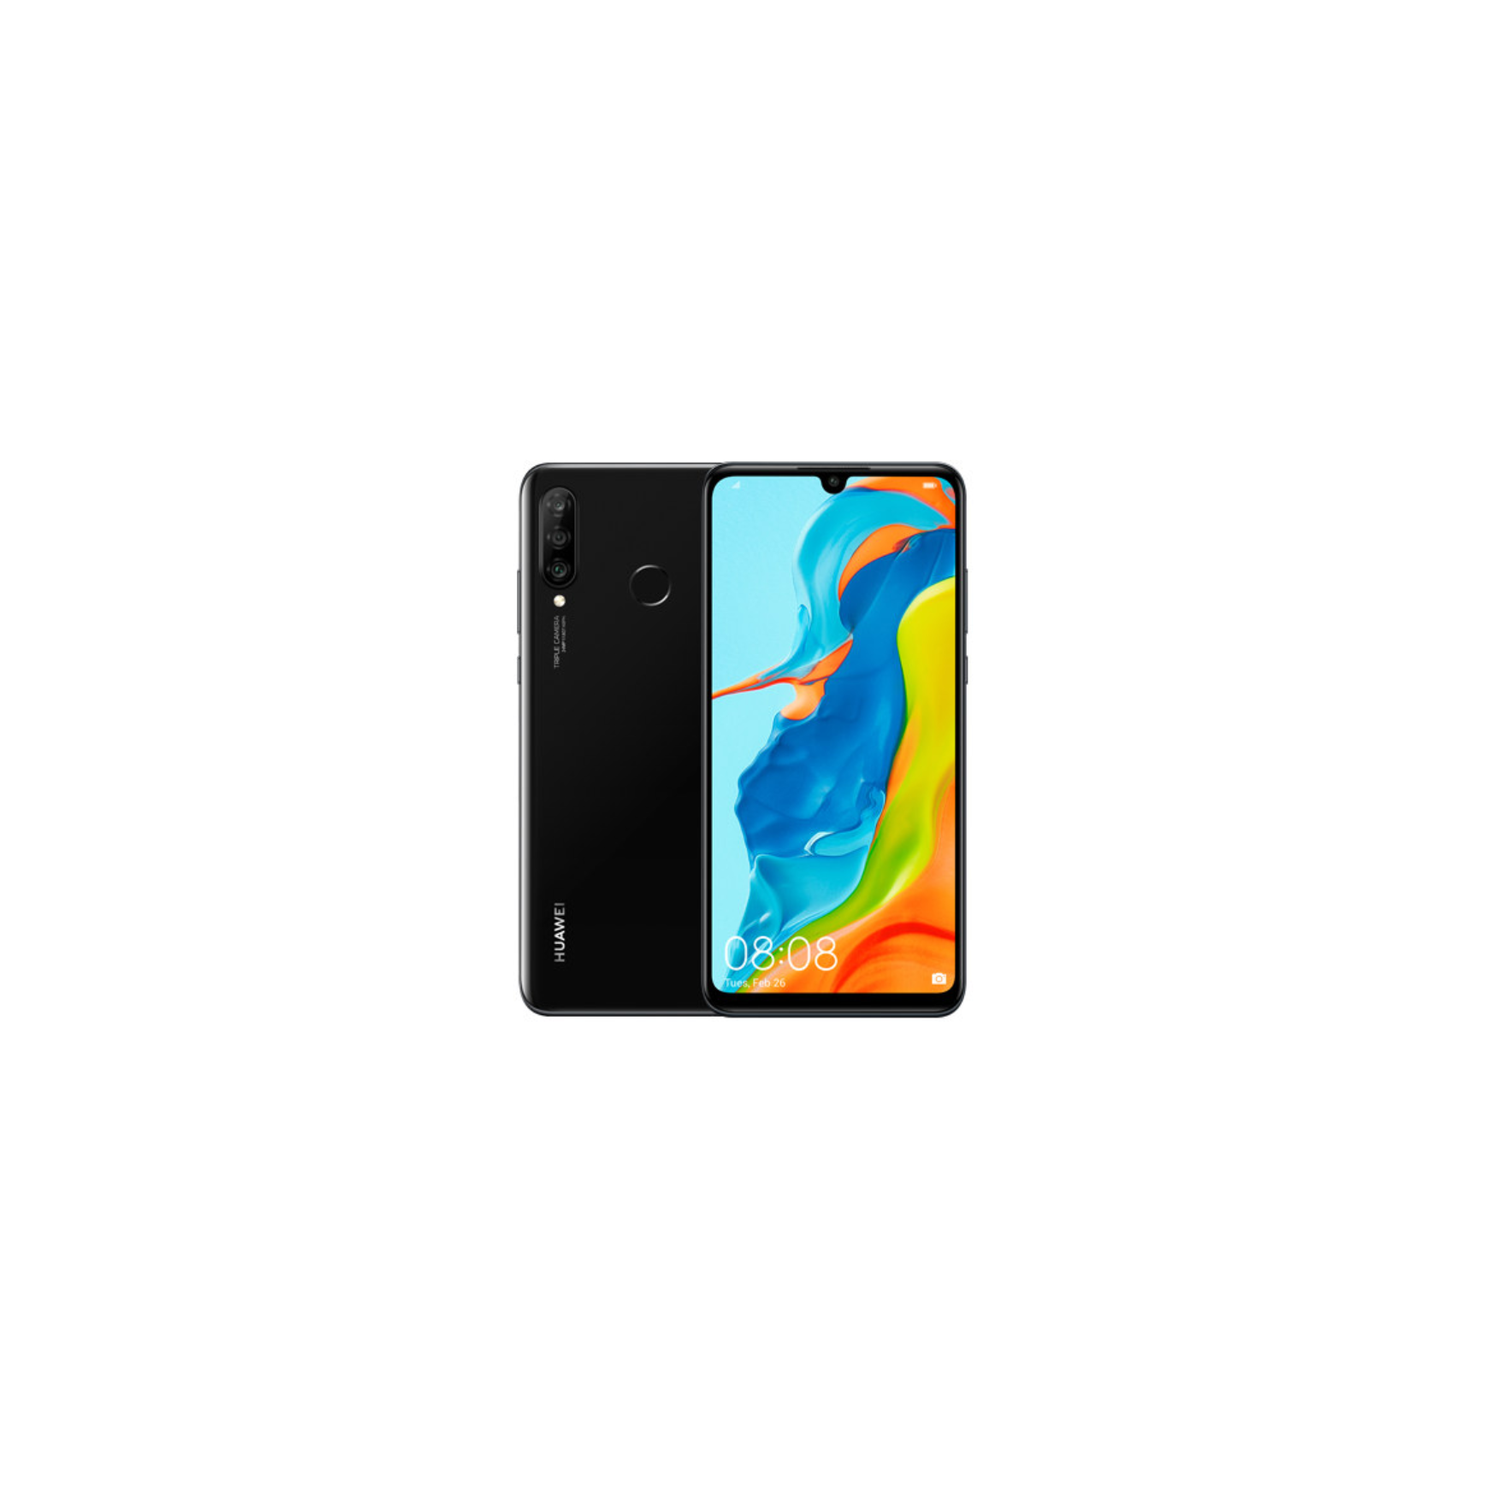 Huawei P30 Lite 128GB Smartphone - Unlocked - Midnight Black (International Version w/Seller Provided Warranty)